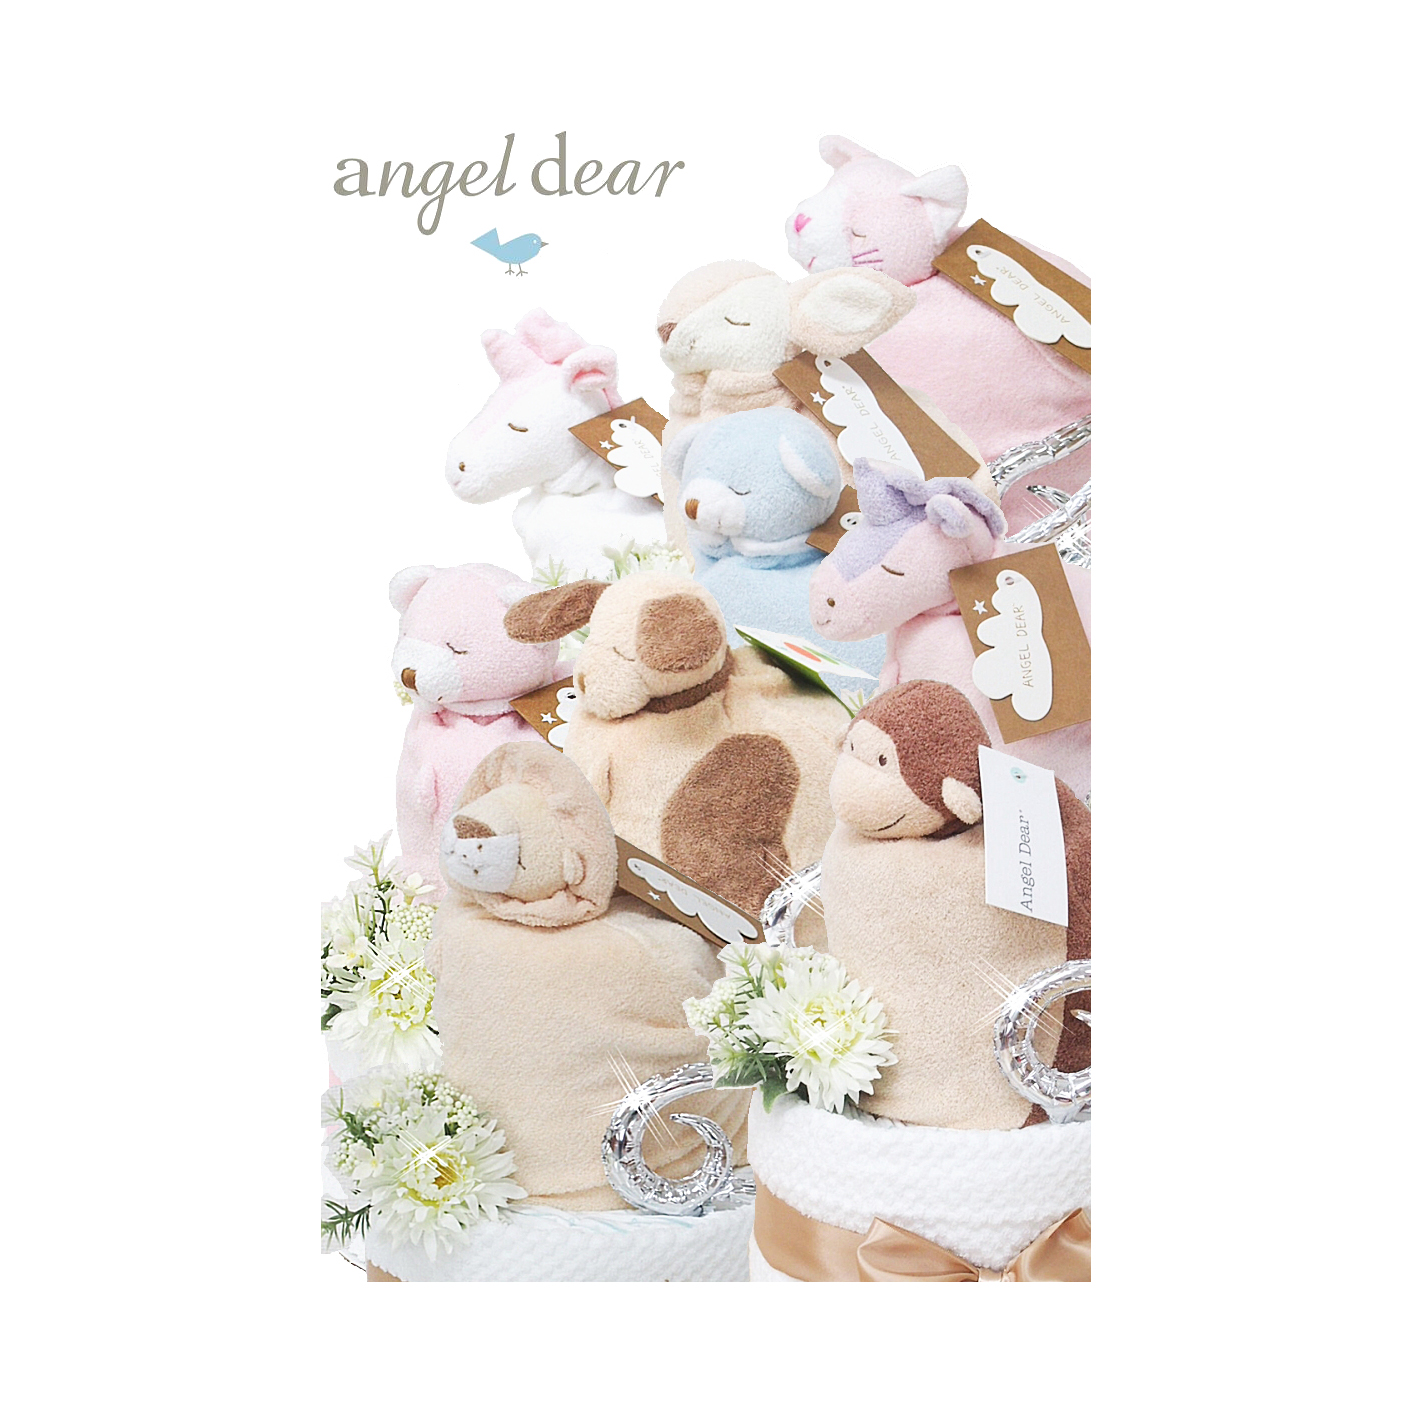 angel dear おむつケーキ